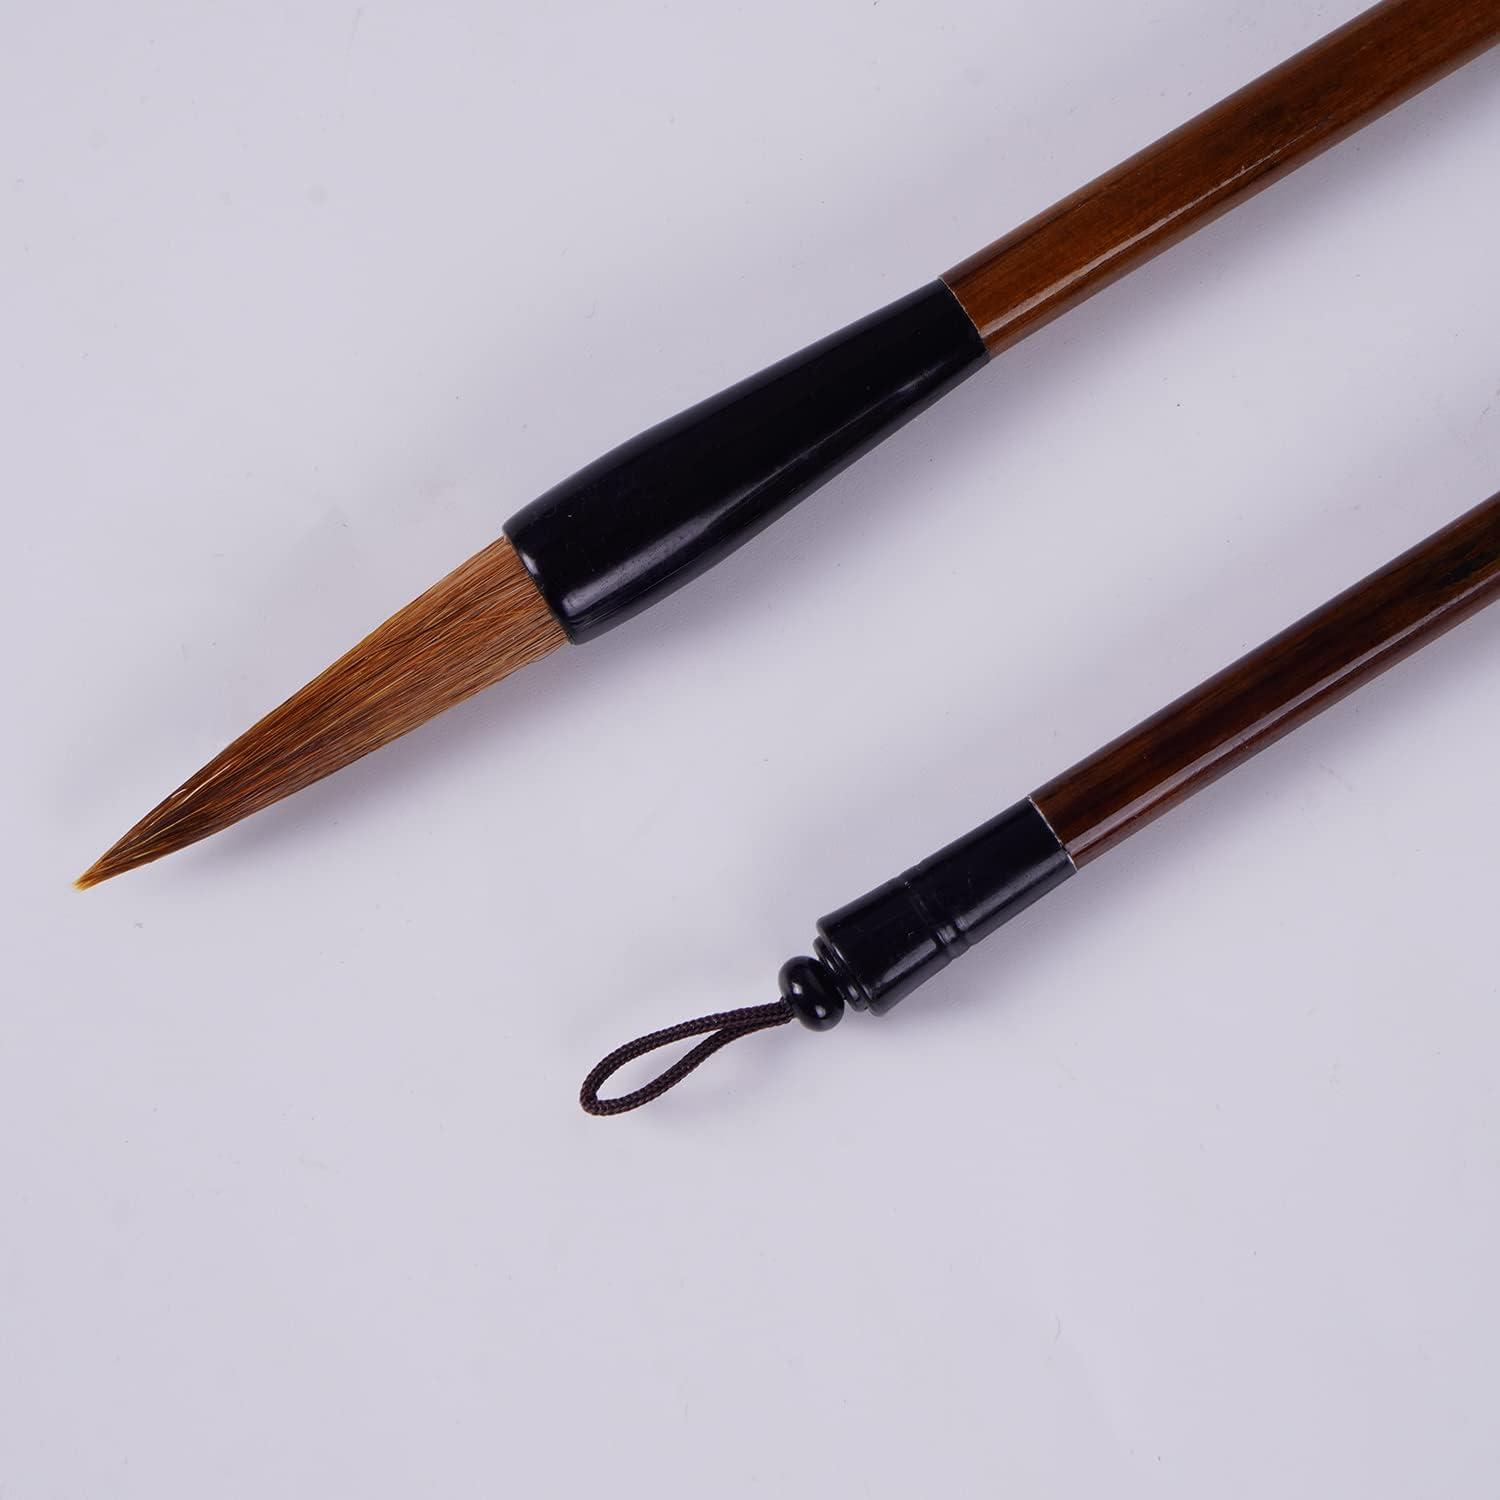 Hbasyp Chinese Traditional Calligraphy Brush/Chinese Calligraphy Watercolor Sumi Drawing Brush-Large Brush (Wolf Hair) - 1 Pcs